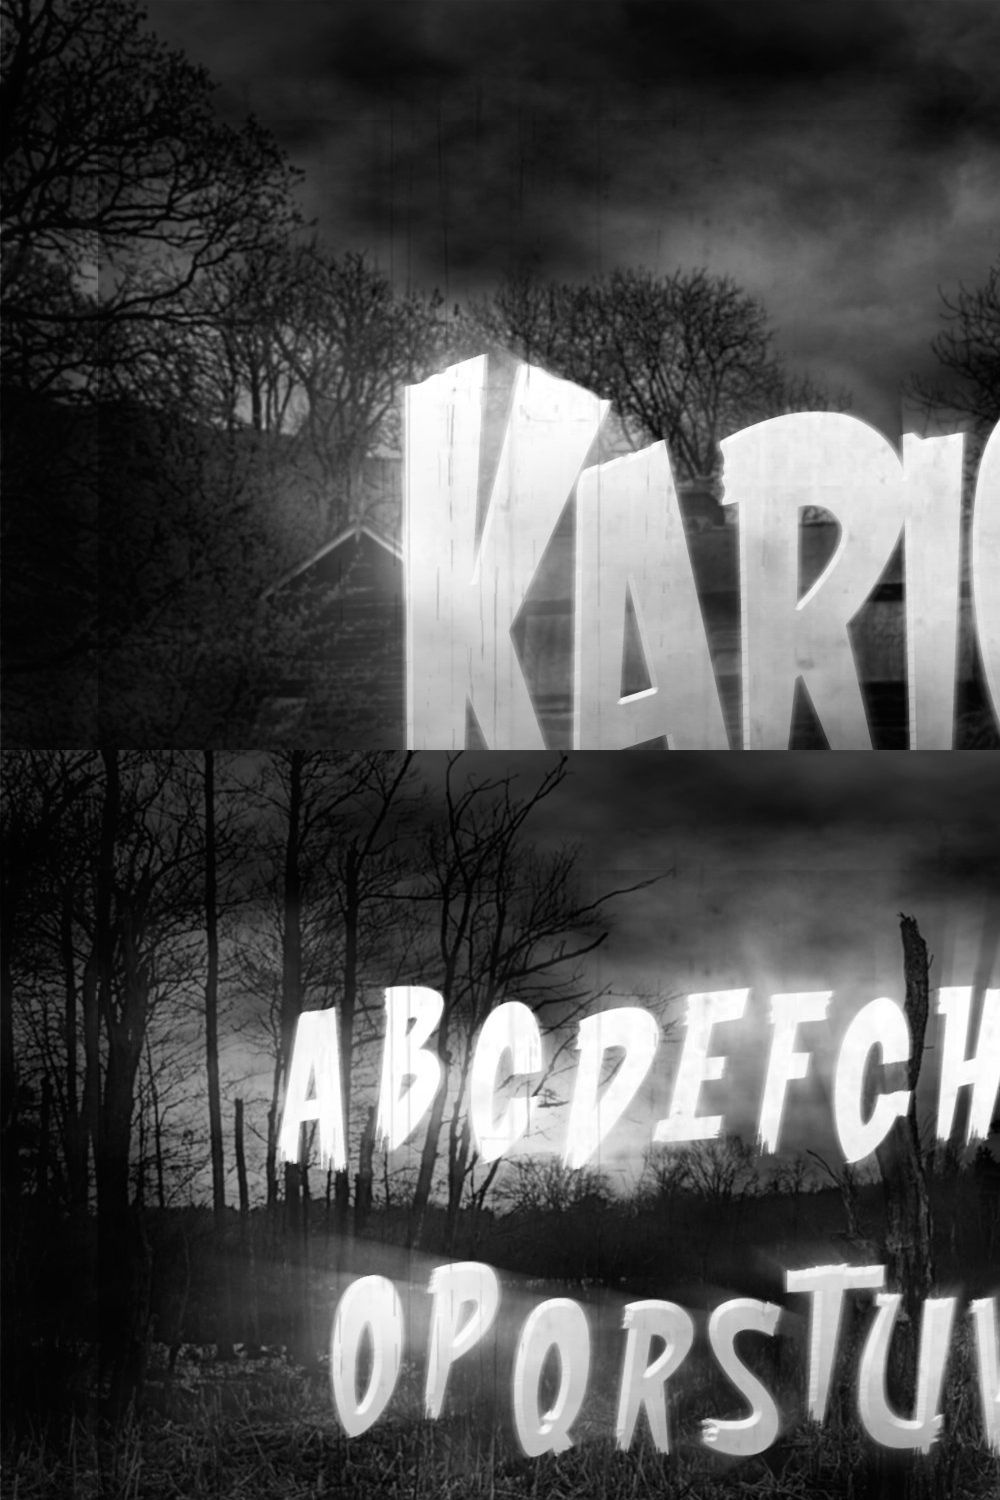 Karloff - Halloween Horror Font pinterest preview image.